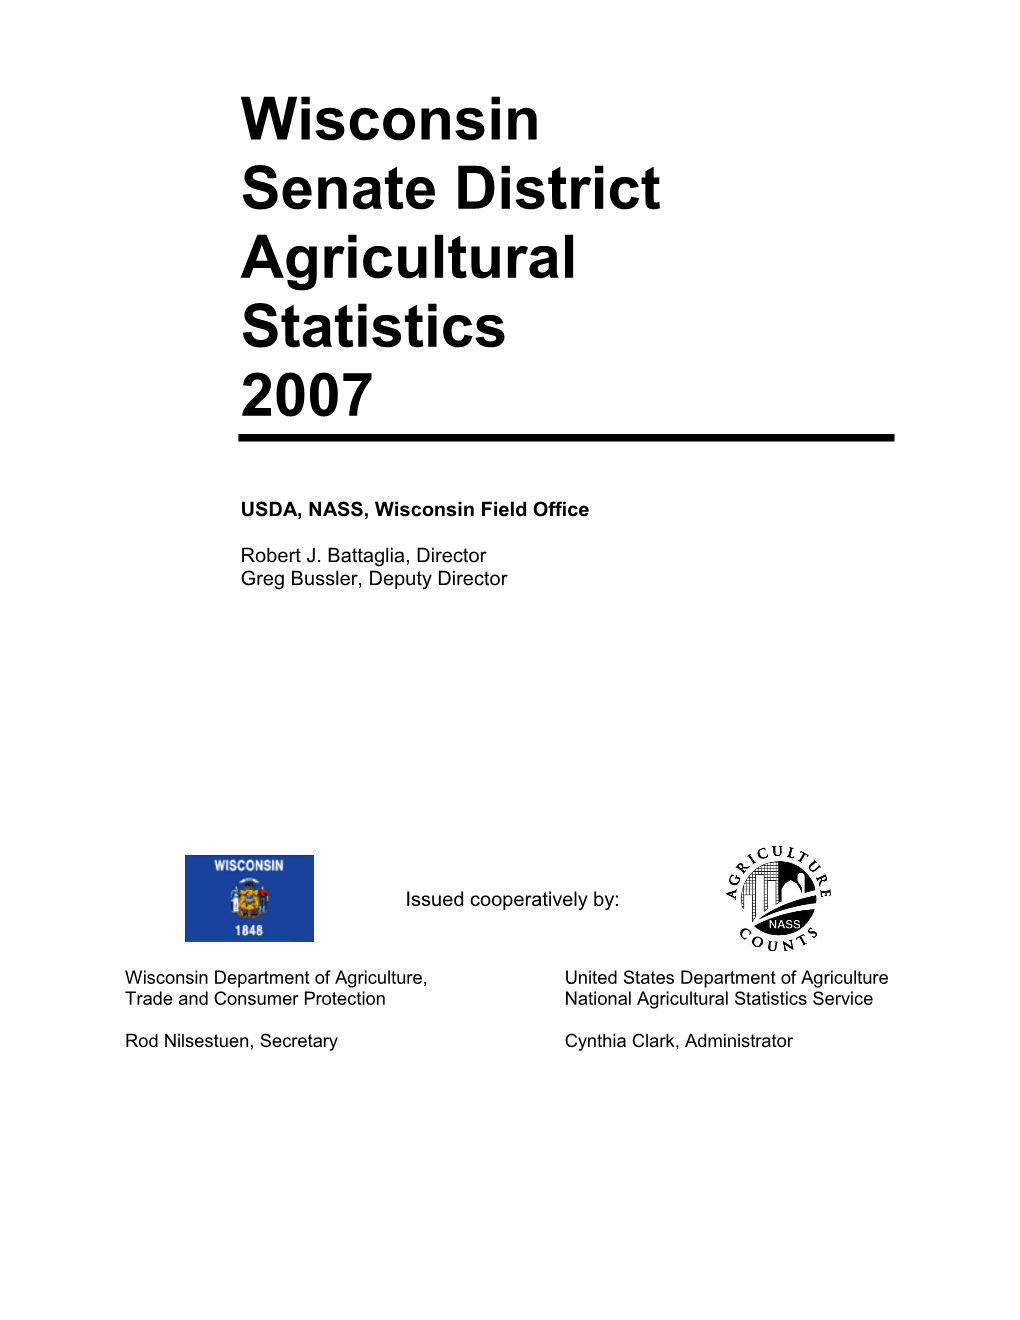 Wisconsin Senate District Agricultural Statistics 2007